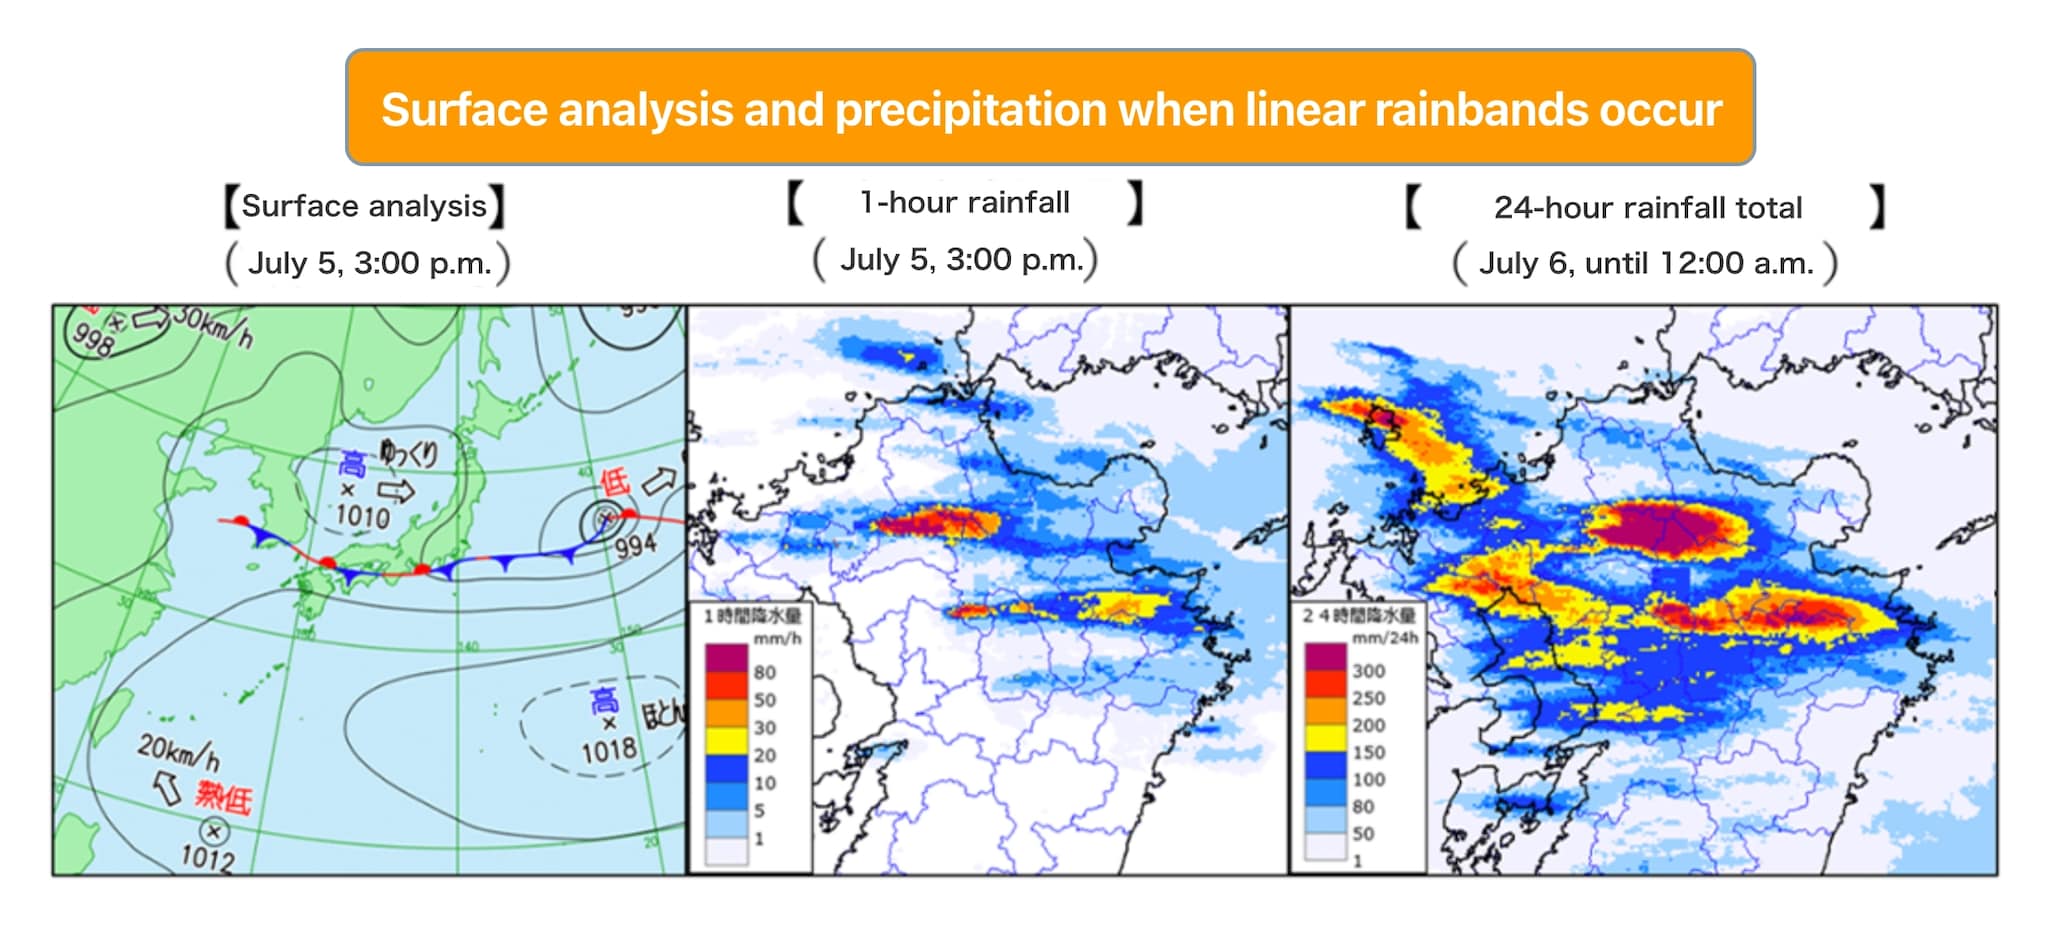 Surface analysis and precipitation when linear rainbands occur